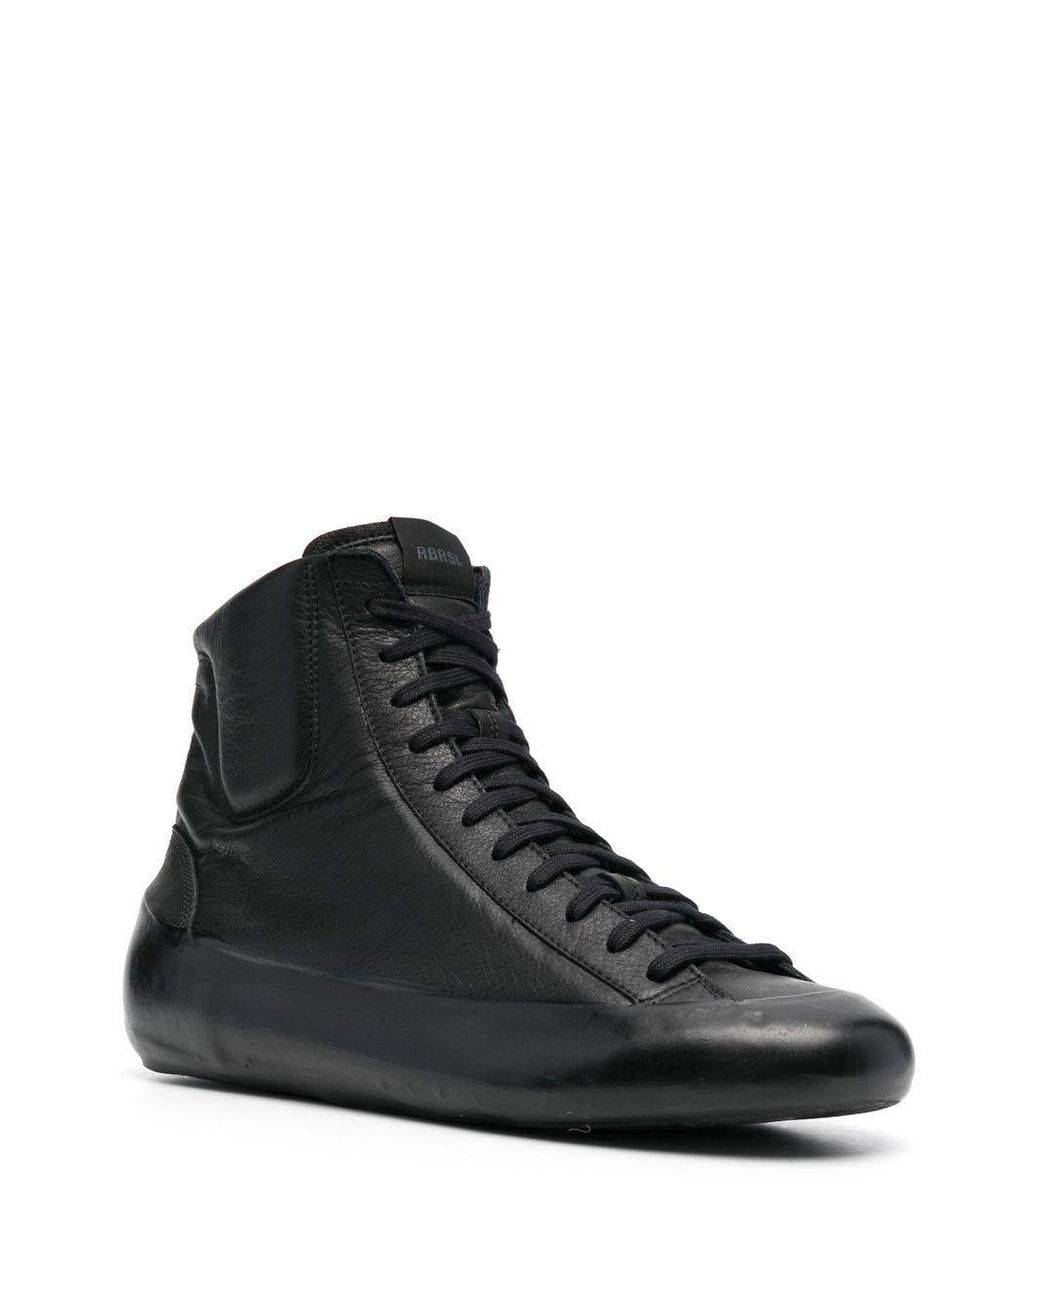 Rbrsl Leather Sneakers in Black for Men | Lyst